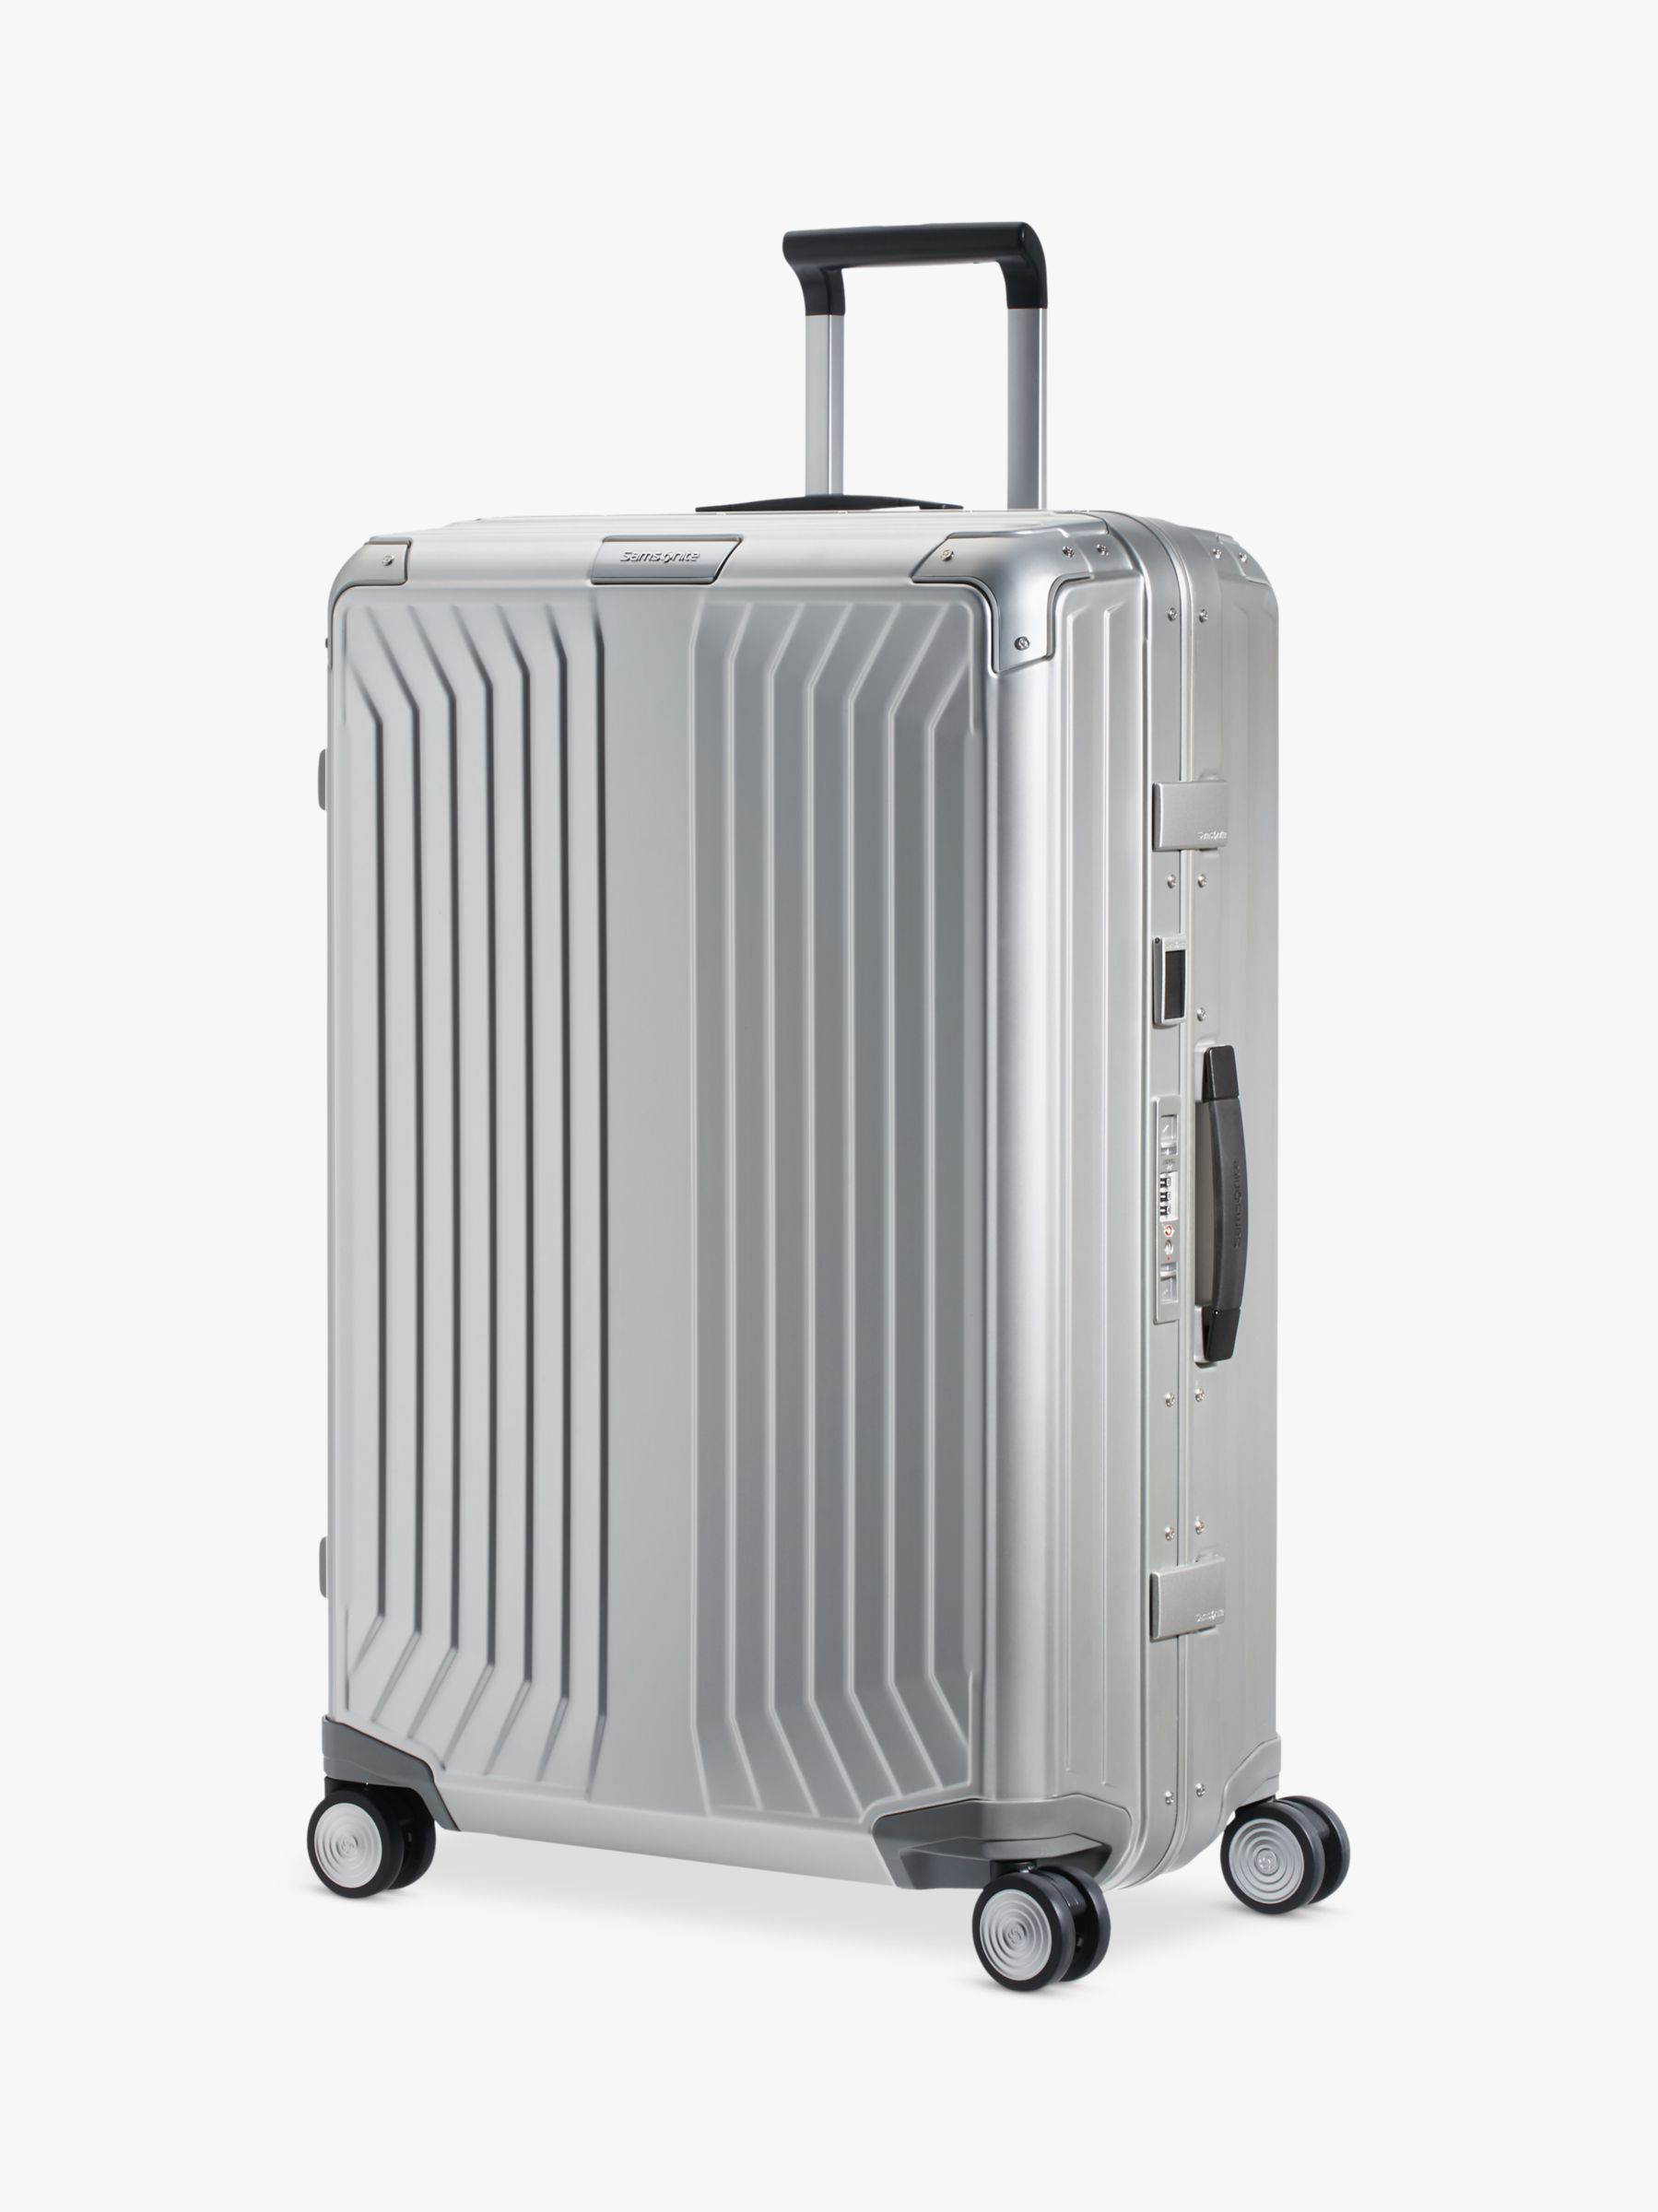 Samsonite Lite-Box 76cm 4-Spinner Wheel Aluminium Suitcase at John Lewis & Partners